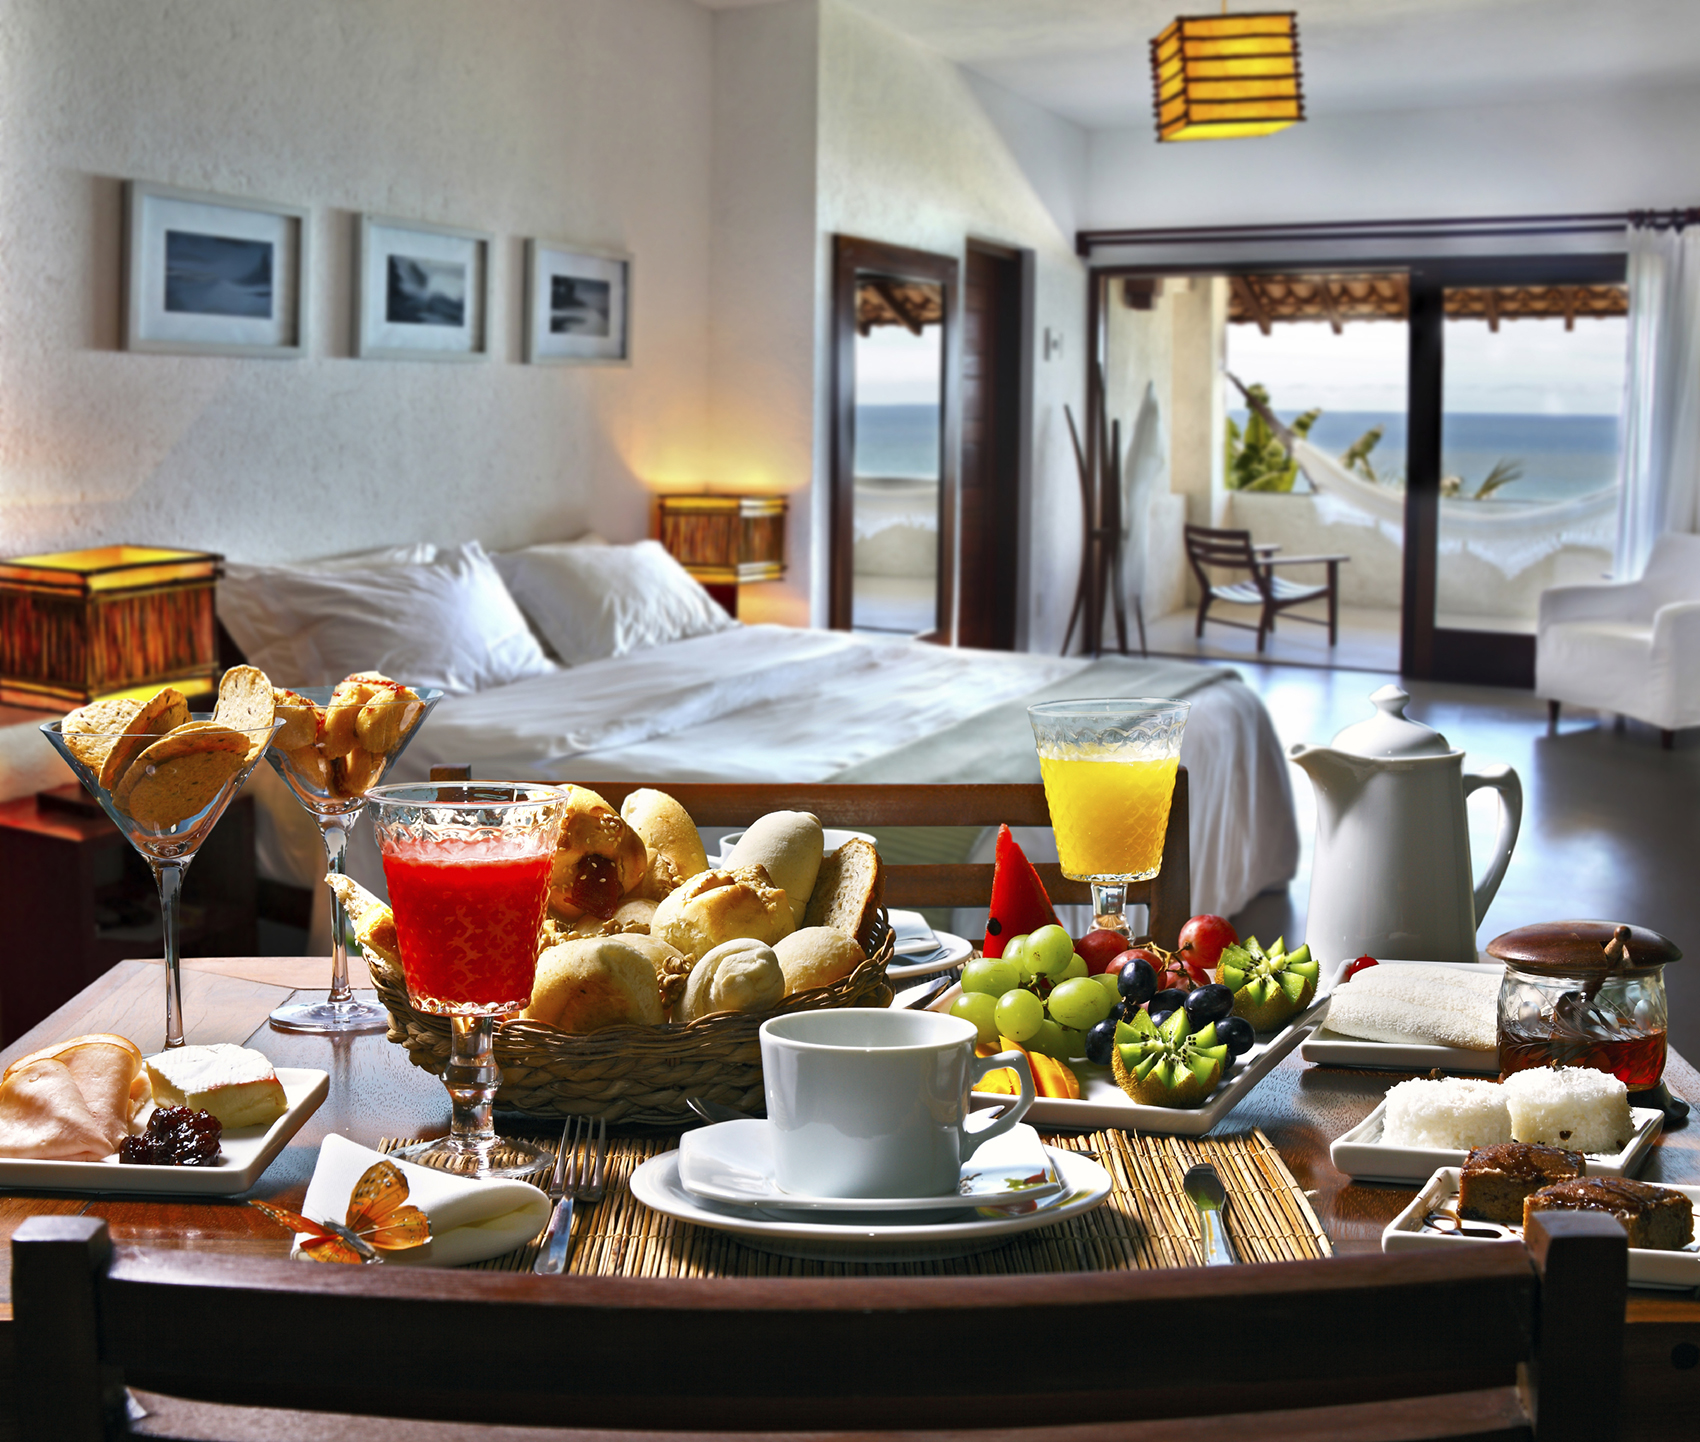 More guests for bed & breakfasts worldwide - Bed and Breakfast Blog |  Bedandbreakfast.eu